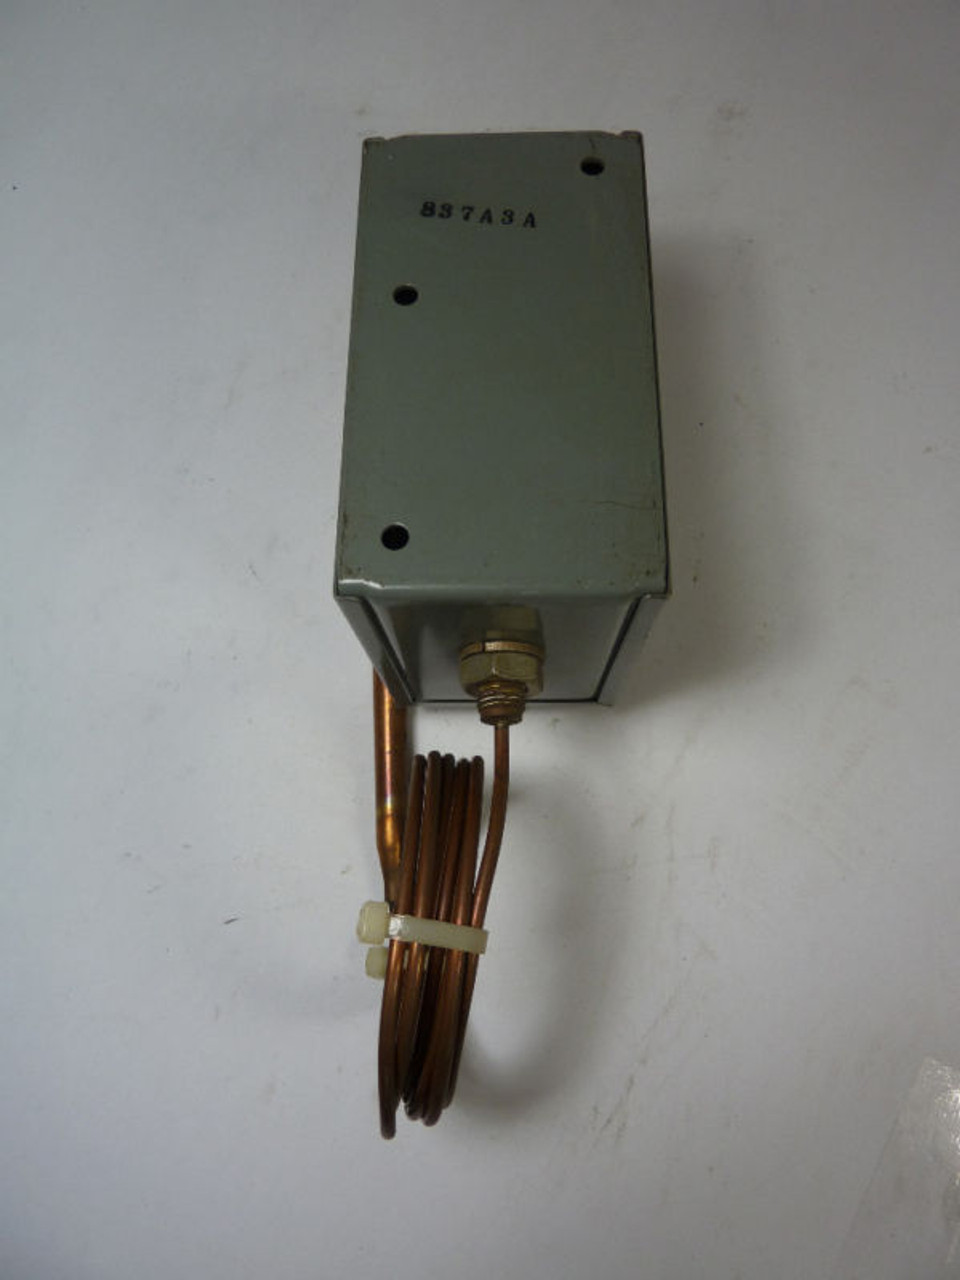 Allen-Bradley 837-A3A Temperature Controller 600V USED